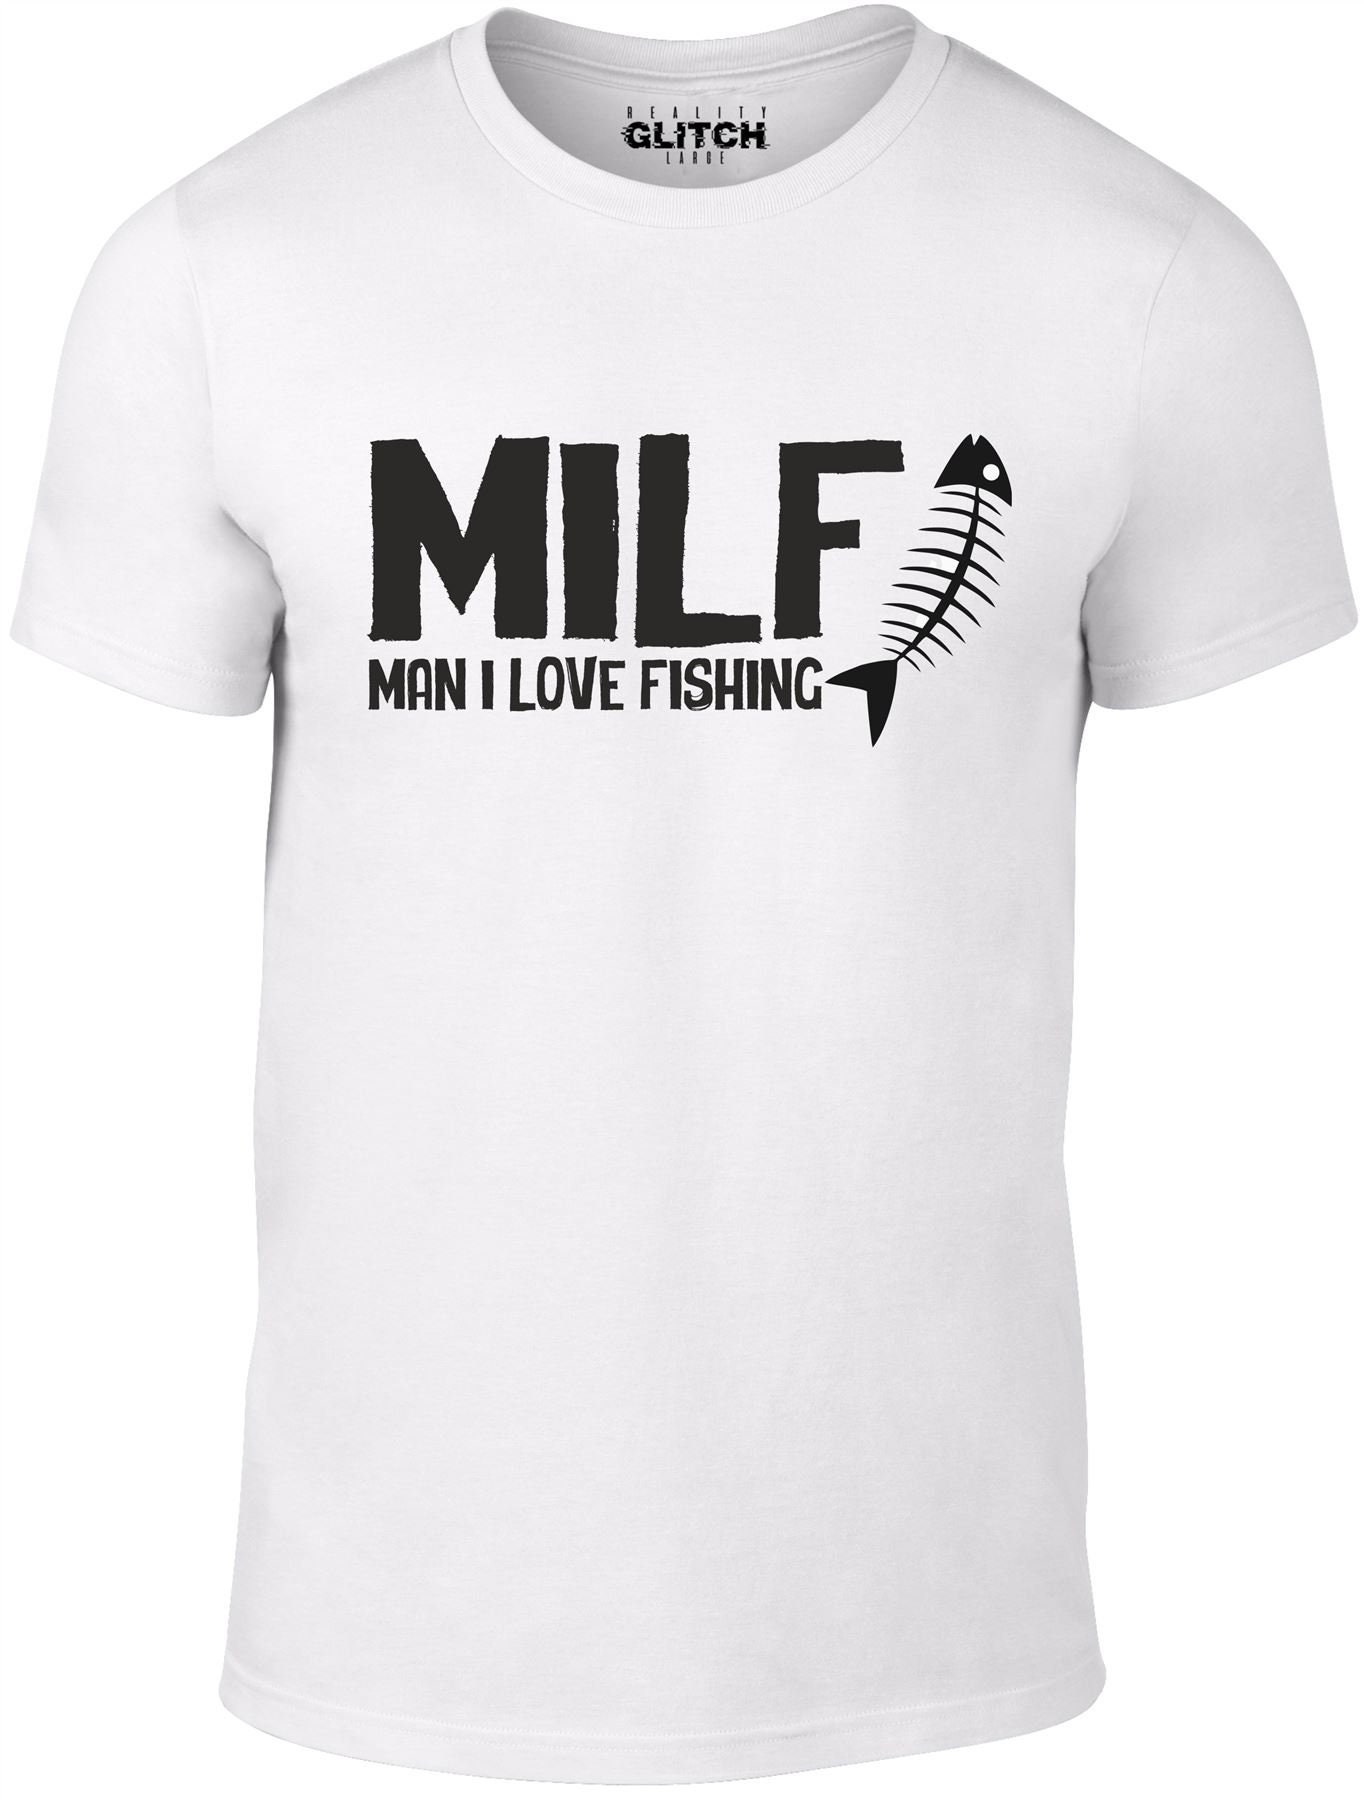 Reality Glitch Men's Man I Love Fishing (MILF) T-Shirt